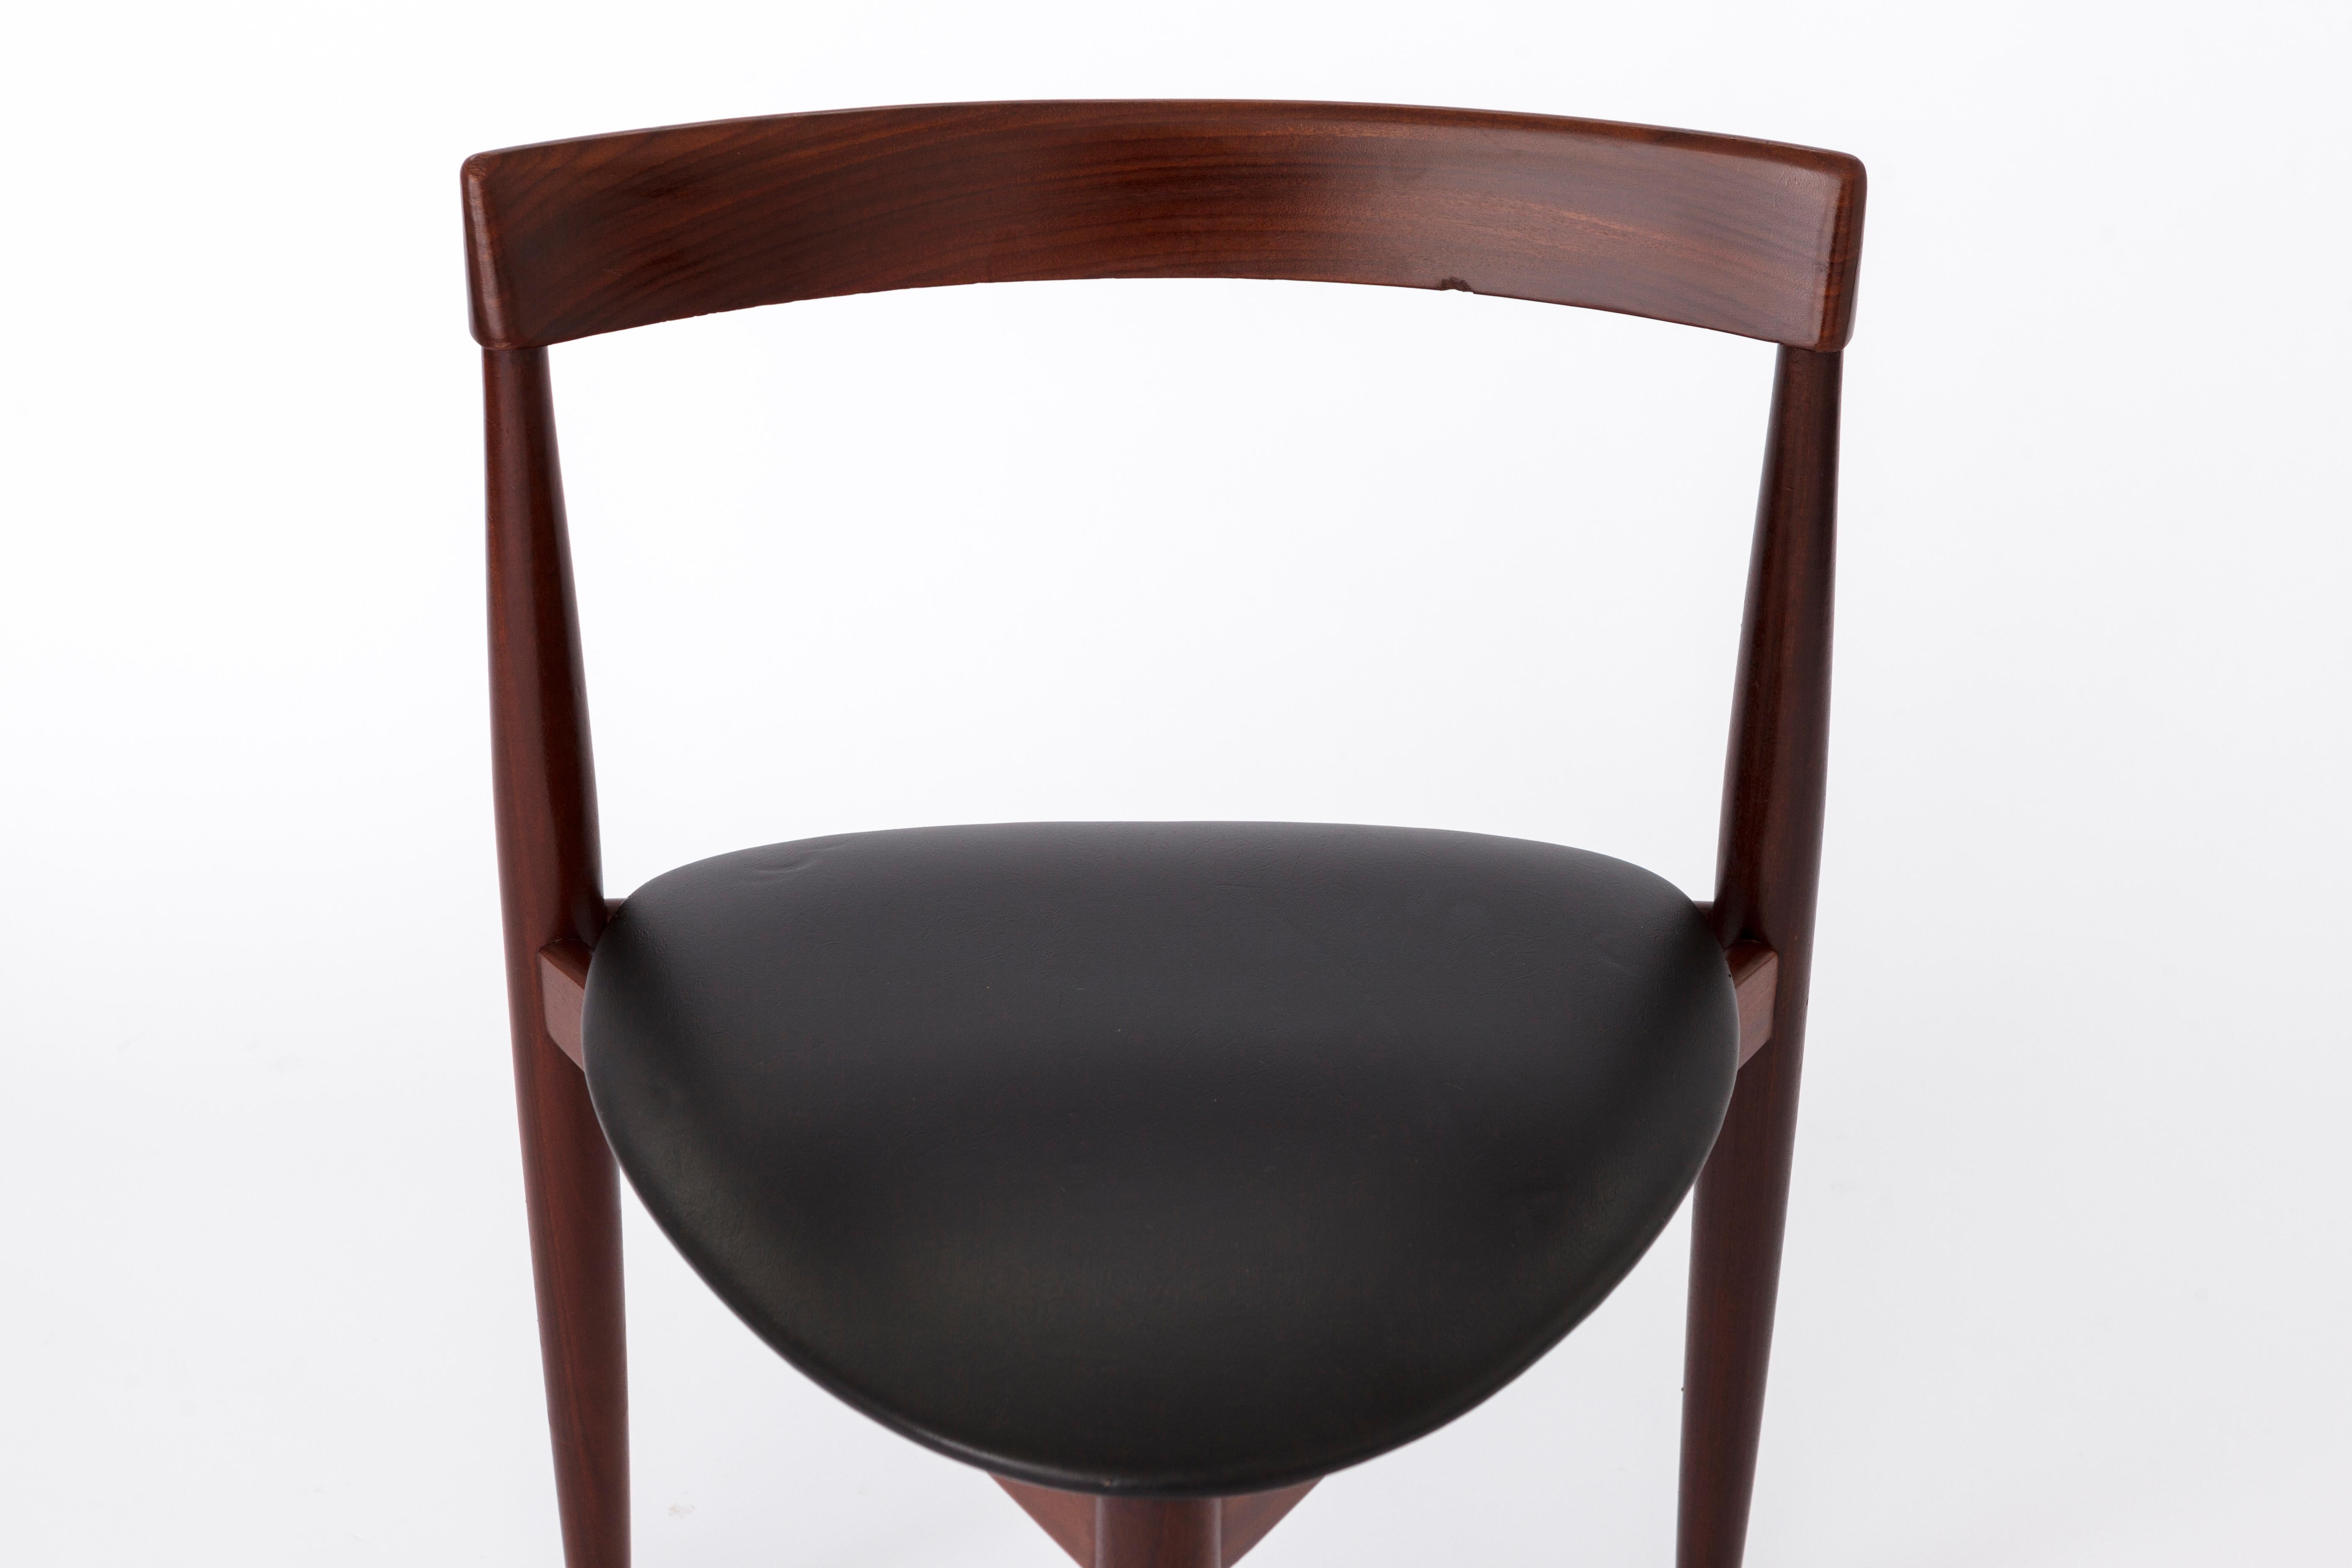 Polished Vintage chair by Hans Olsen, for Frem Røjle, 1960s, Teak, Danish, three legged